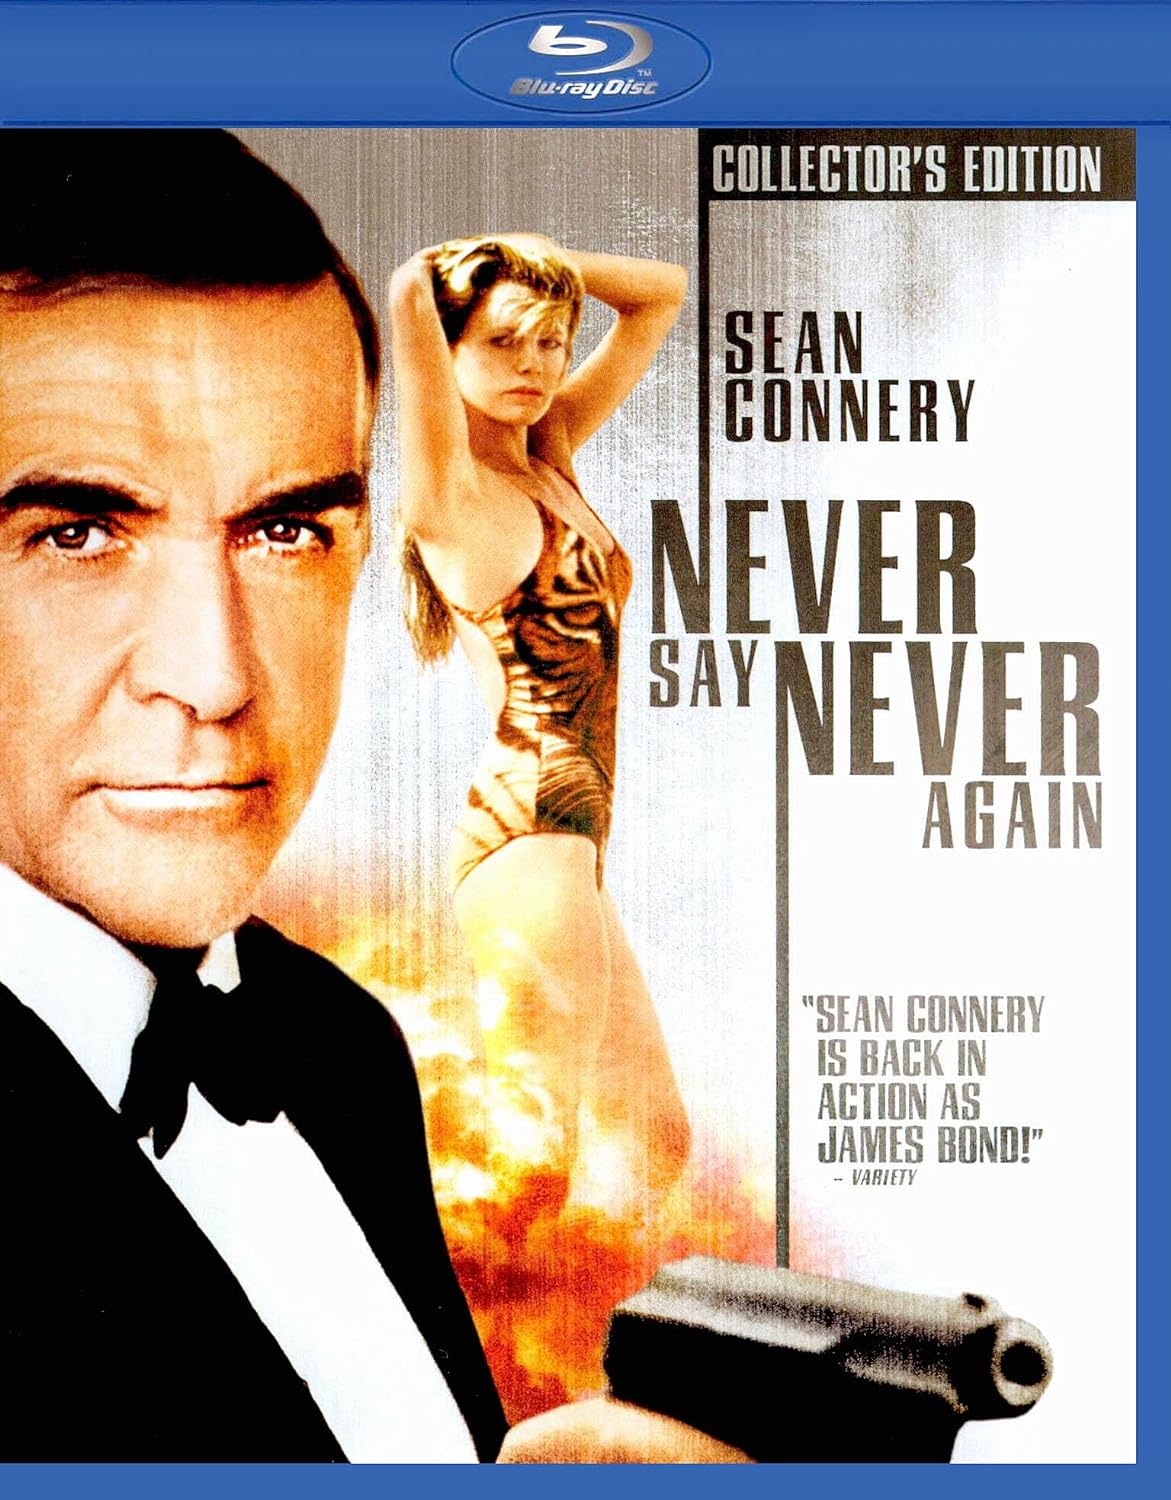 James Bond Films: Never Say Never Again